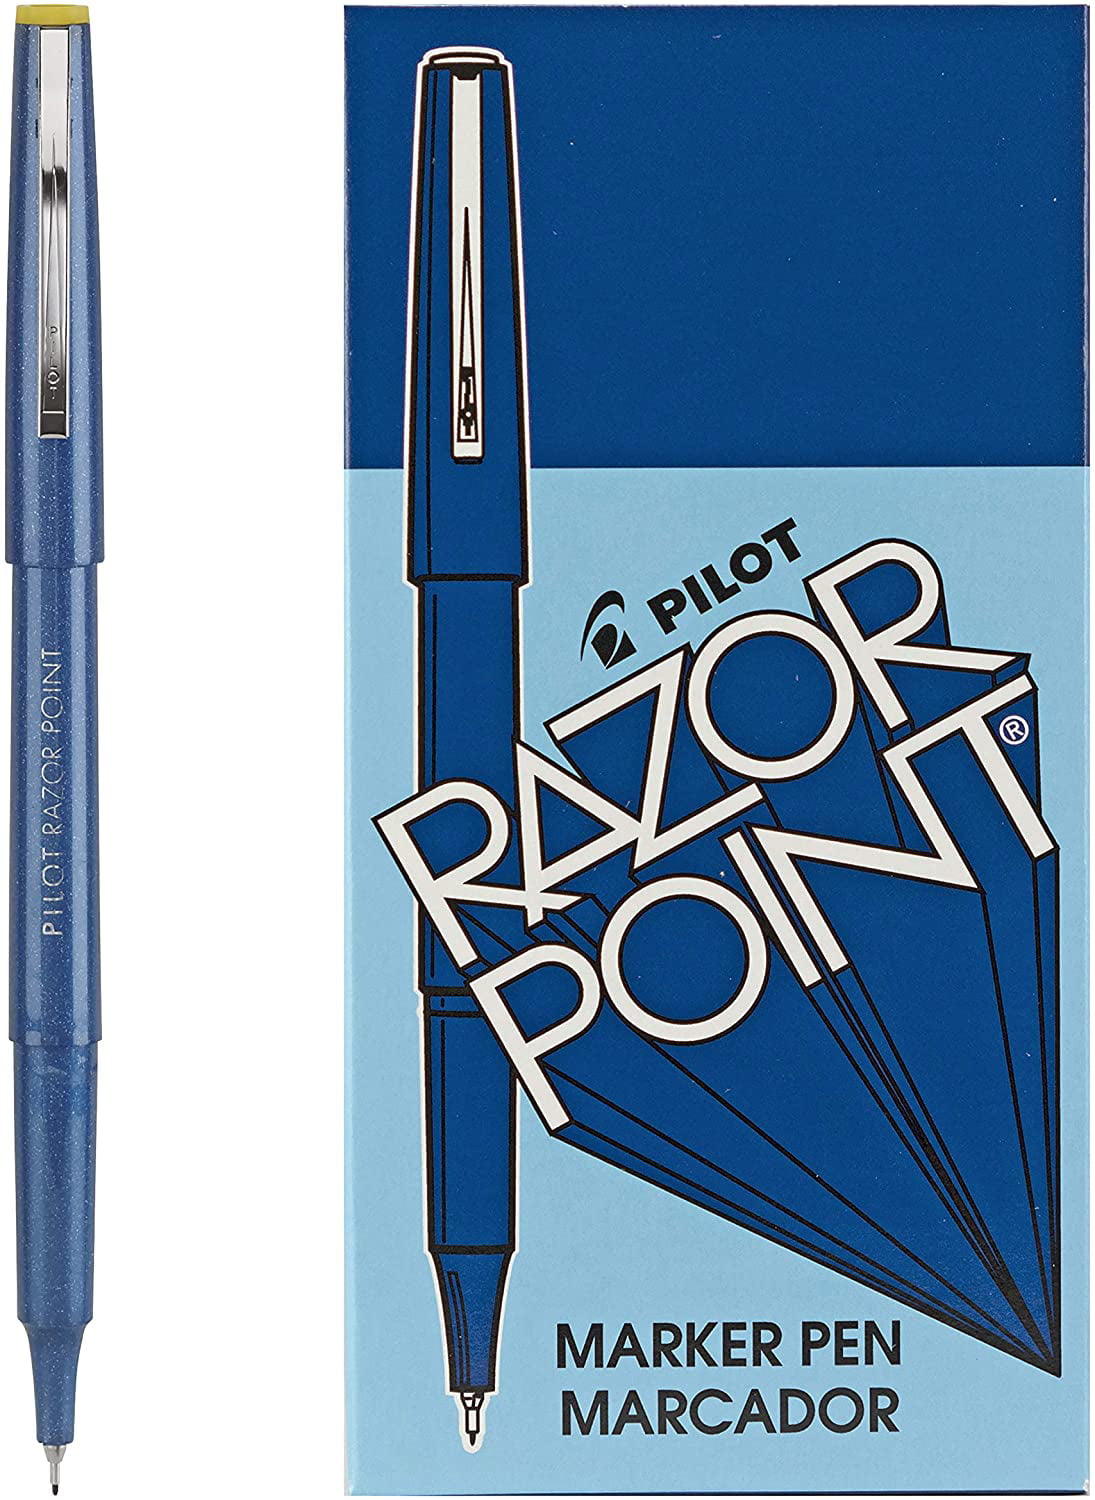 Red Ink Razor Point Fine Line Marker Stick Pens 0.3mm 12-Pack Pack of 12 2 Pack 11007 Ultra-Fine Point